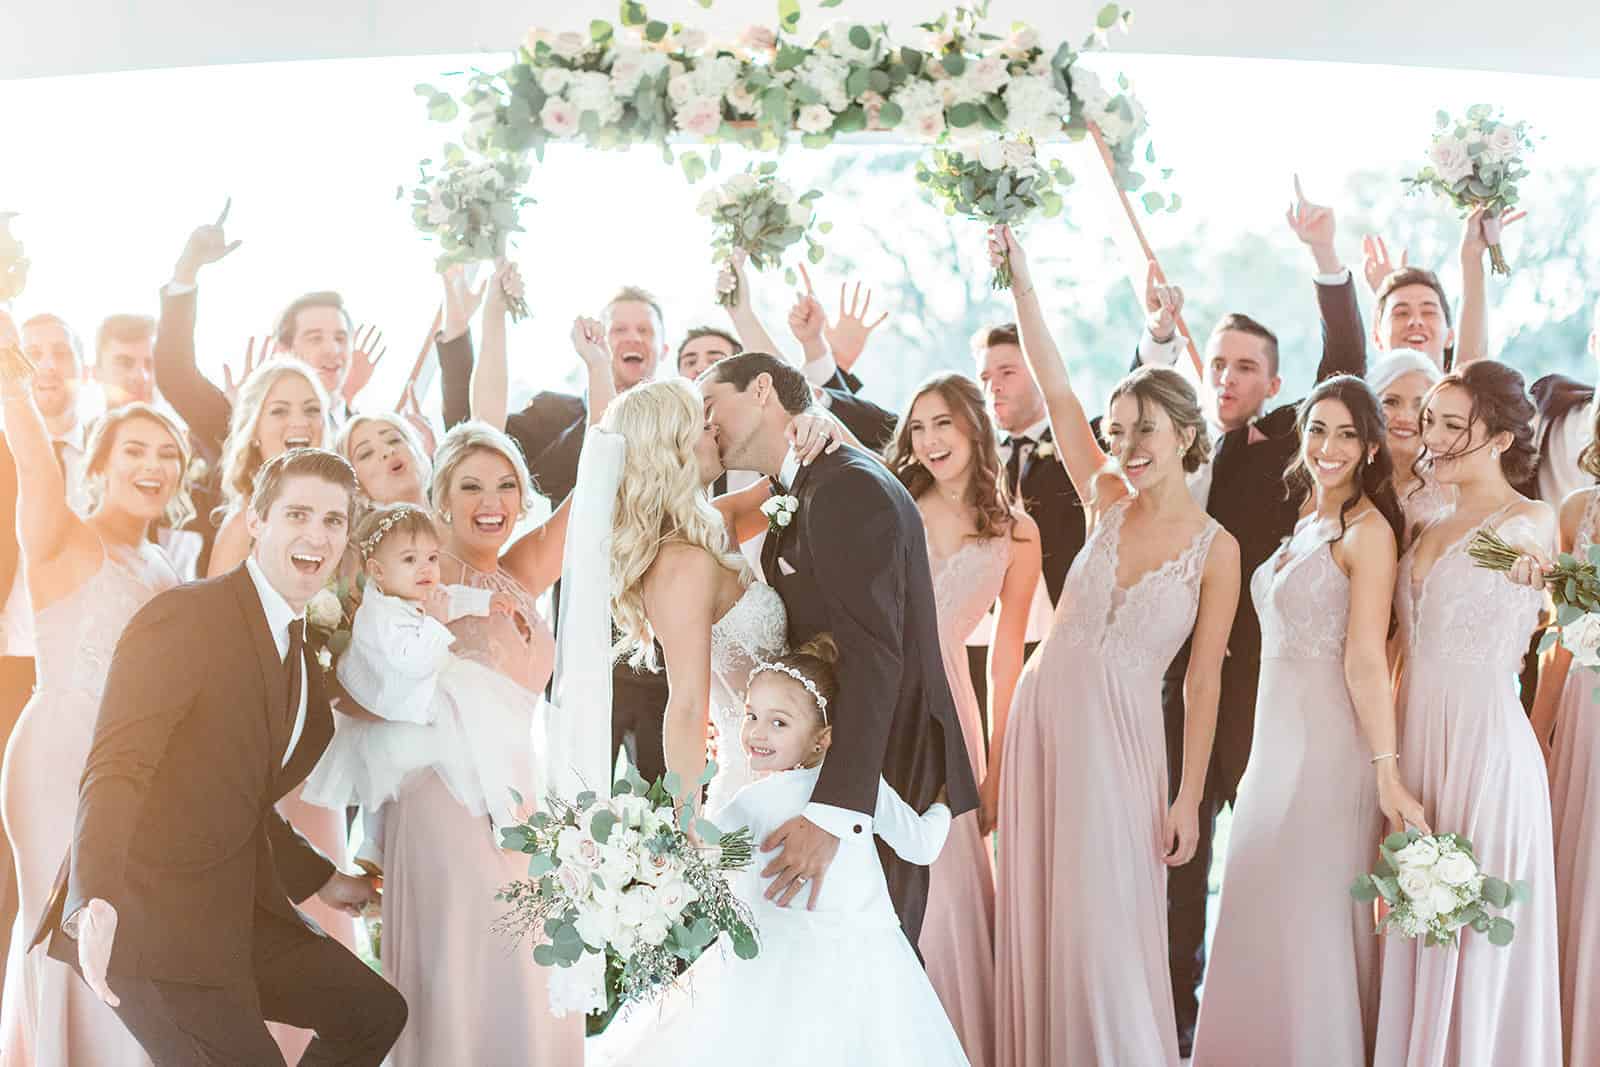 Outdoor Ceremony - Just Marry Weddings - The Hendricks Photography